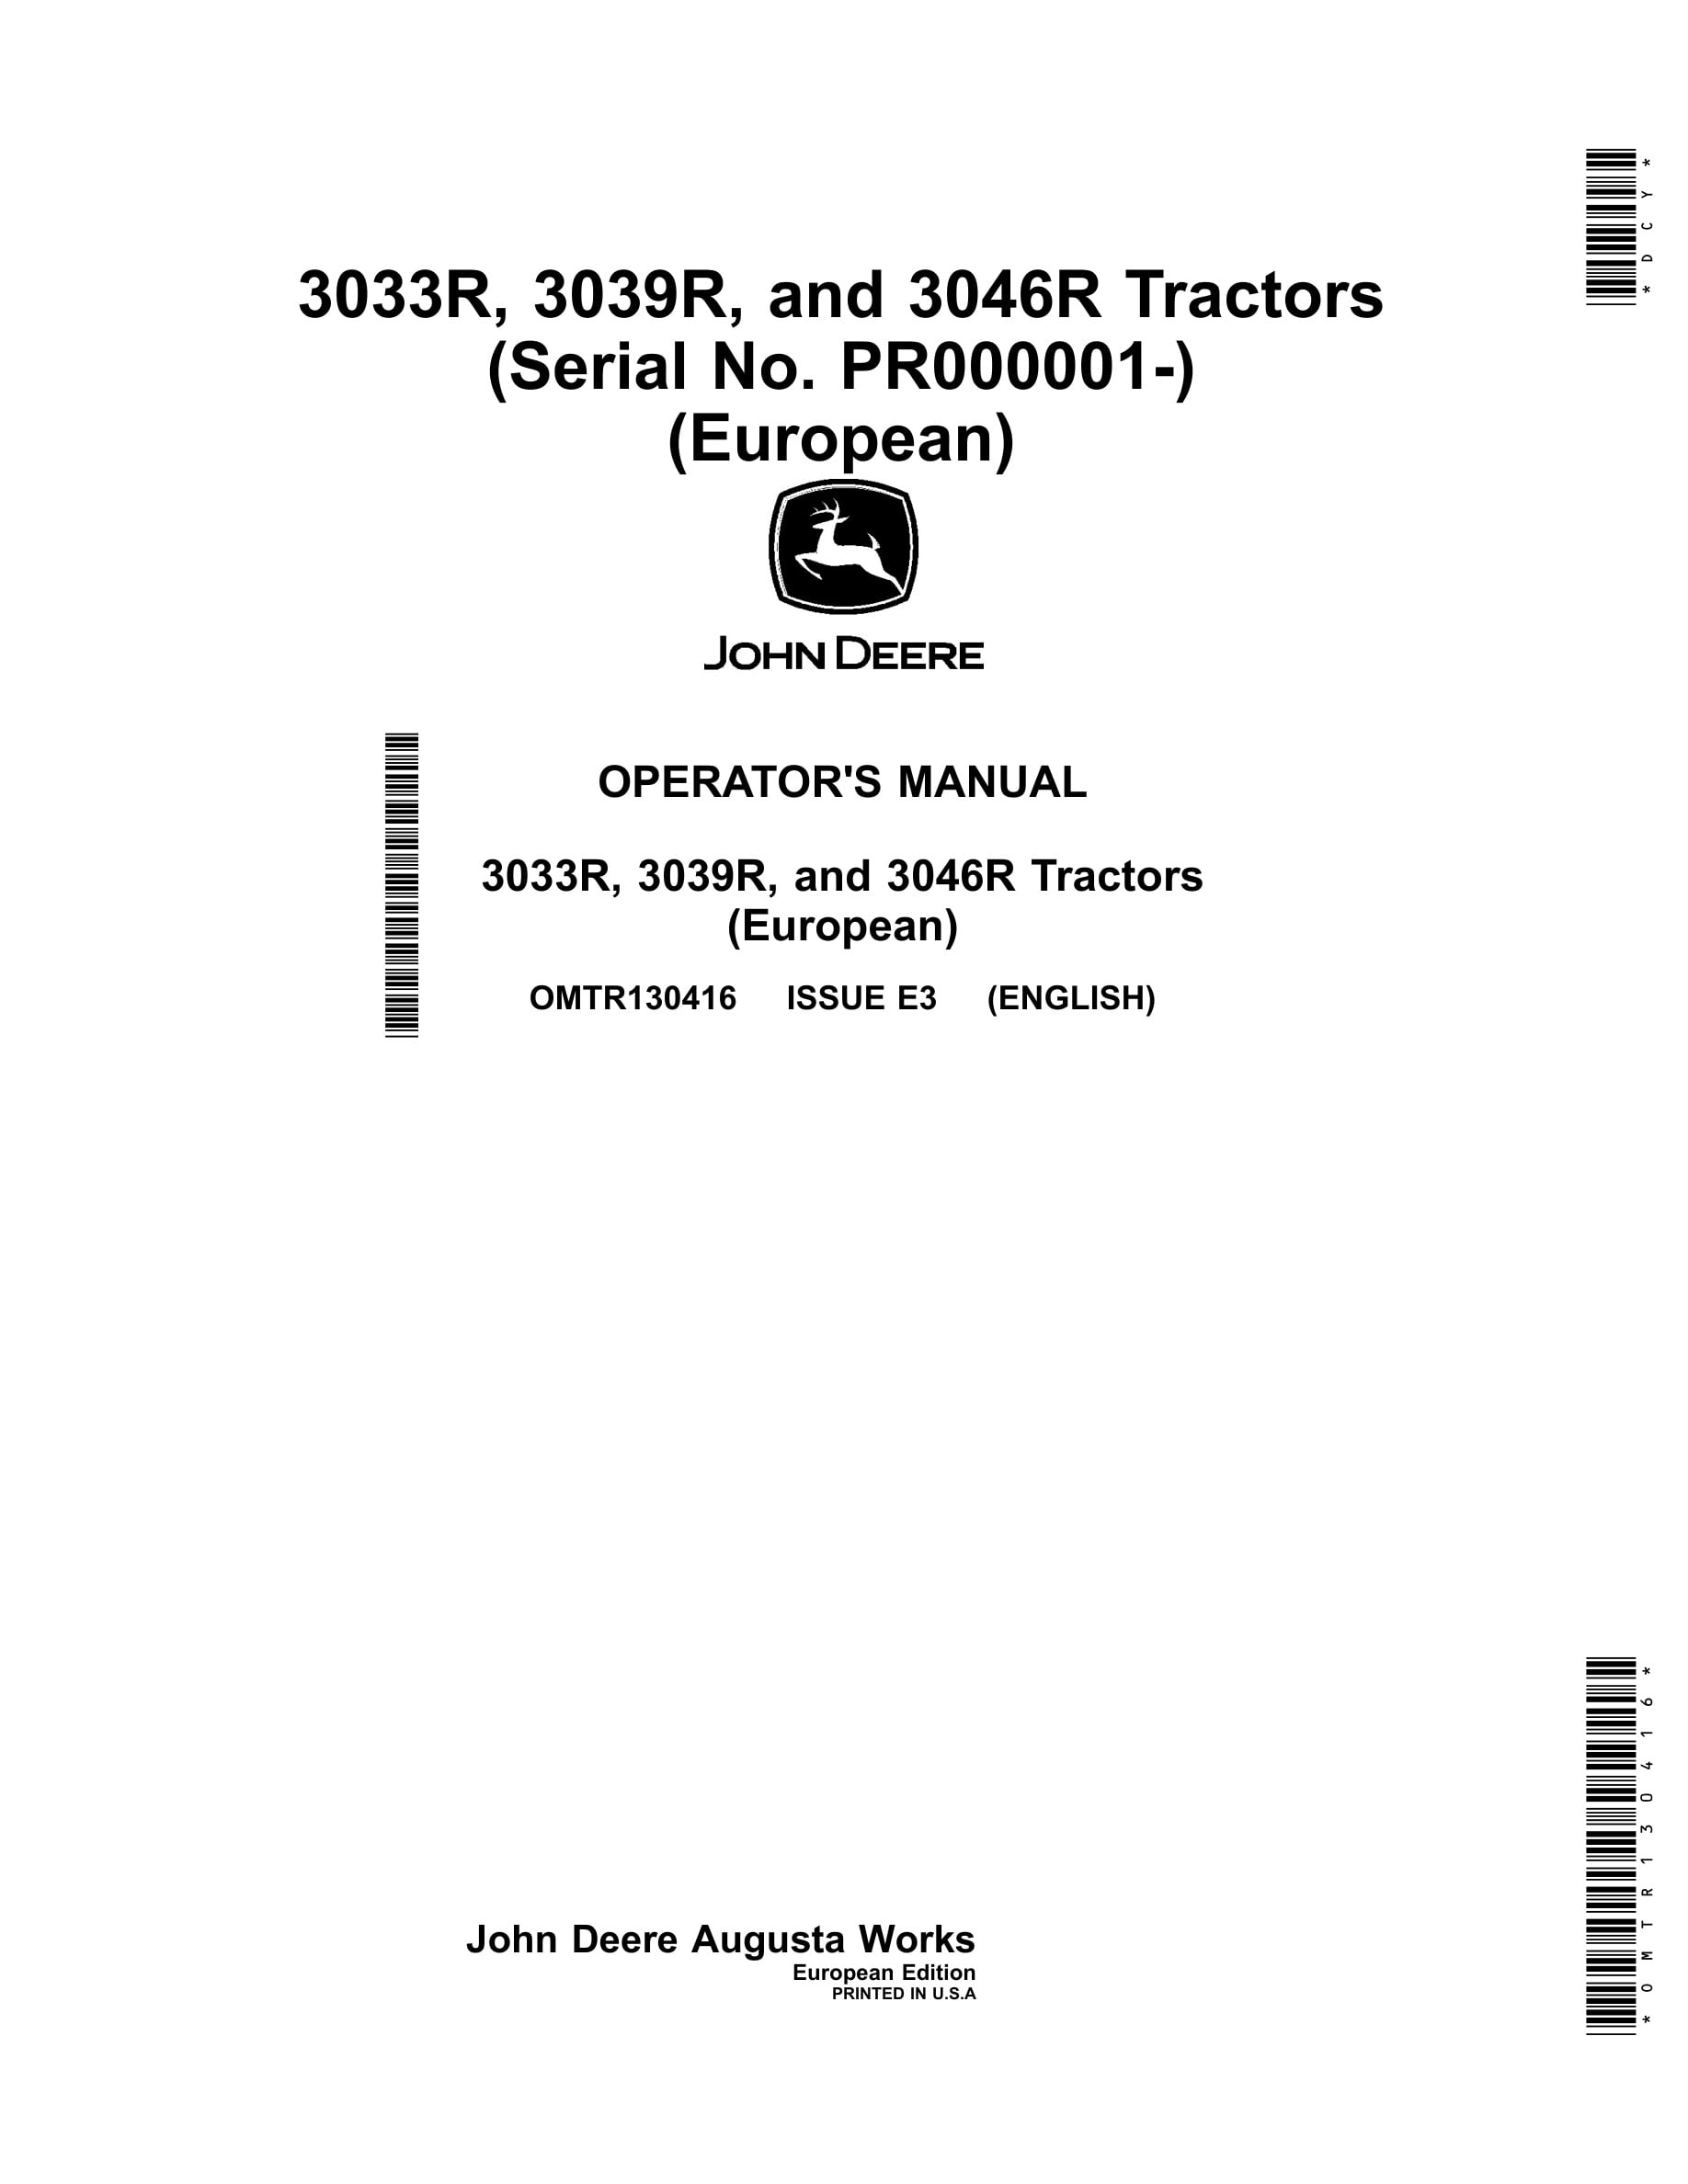 John Deere 3033r, 3039r, And 3046r Tractors Operator Manuals OMTR130416-1